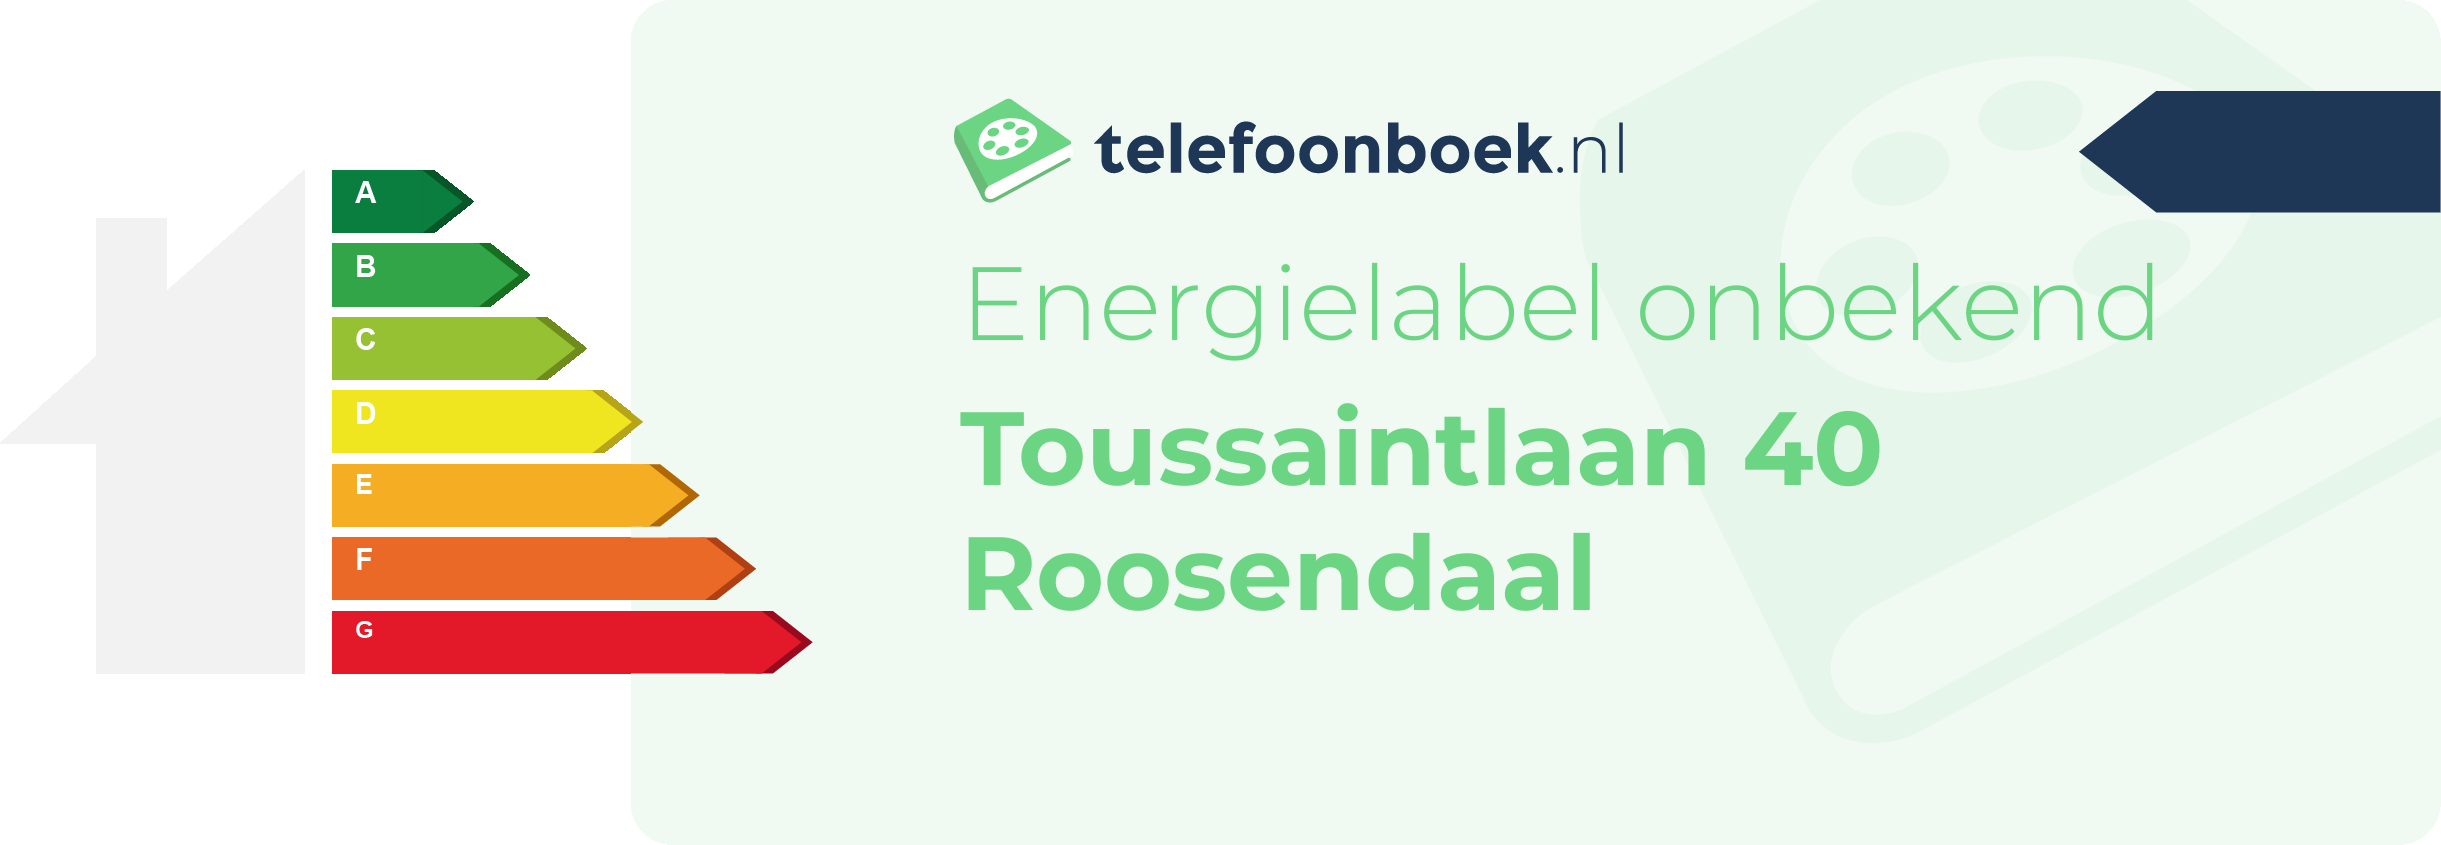 Energielabel Toussaintlaan 40 Roosendaal